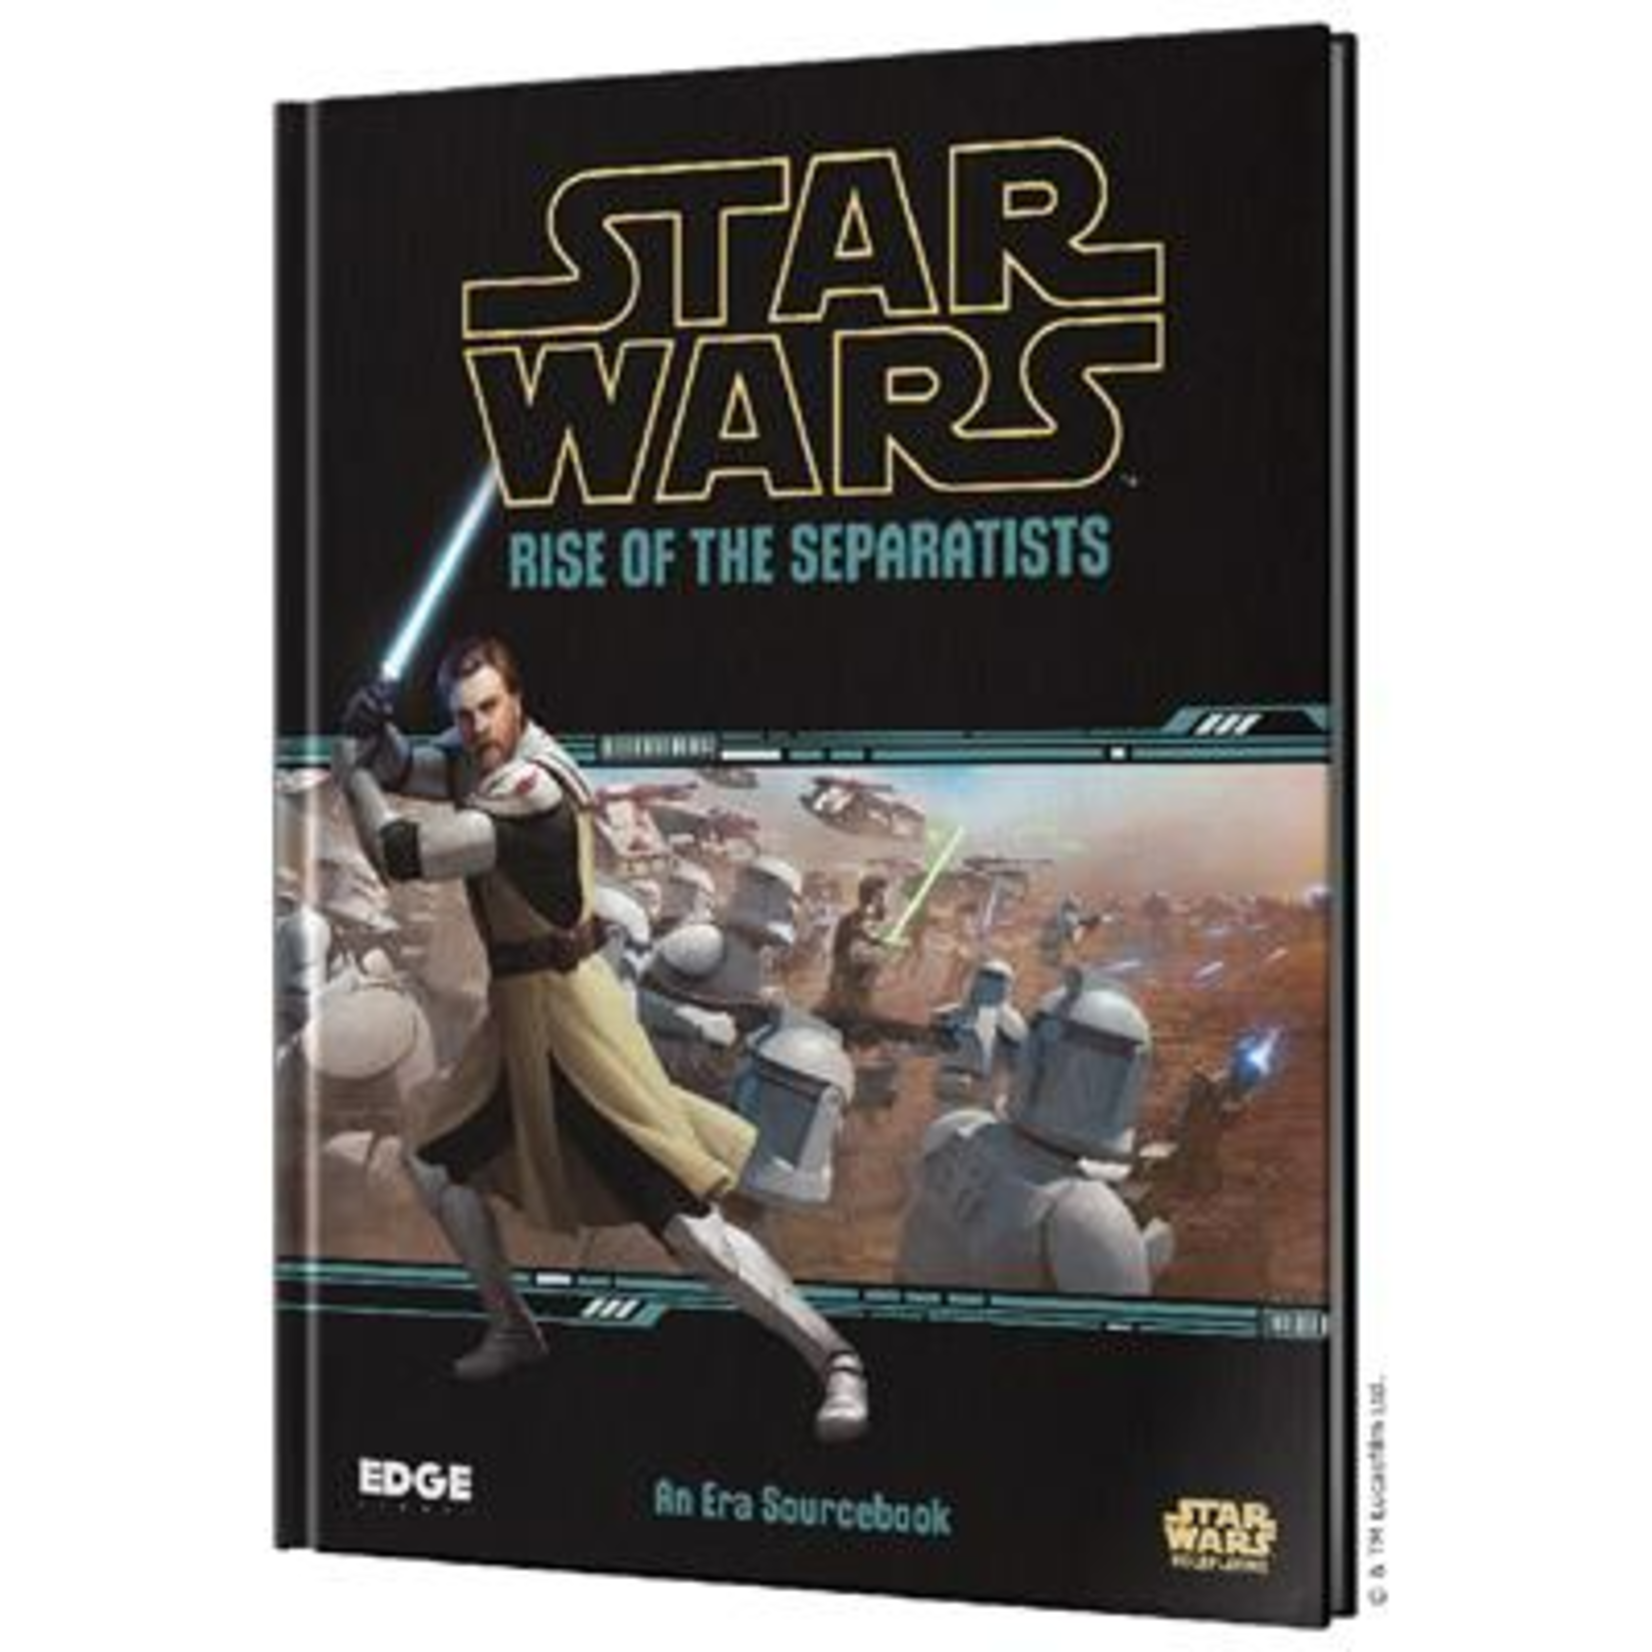 Edge Studios Star Wars Rise of the Separatists Sourcebook